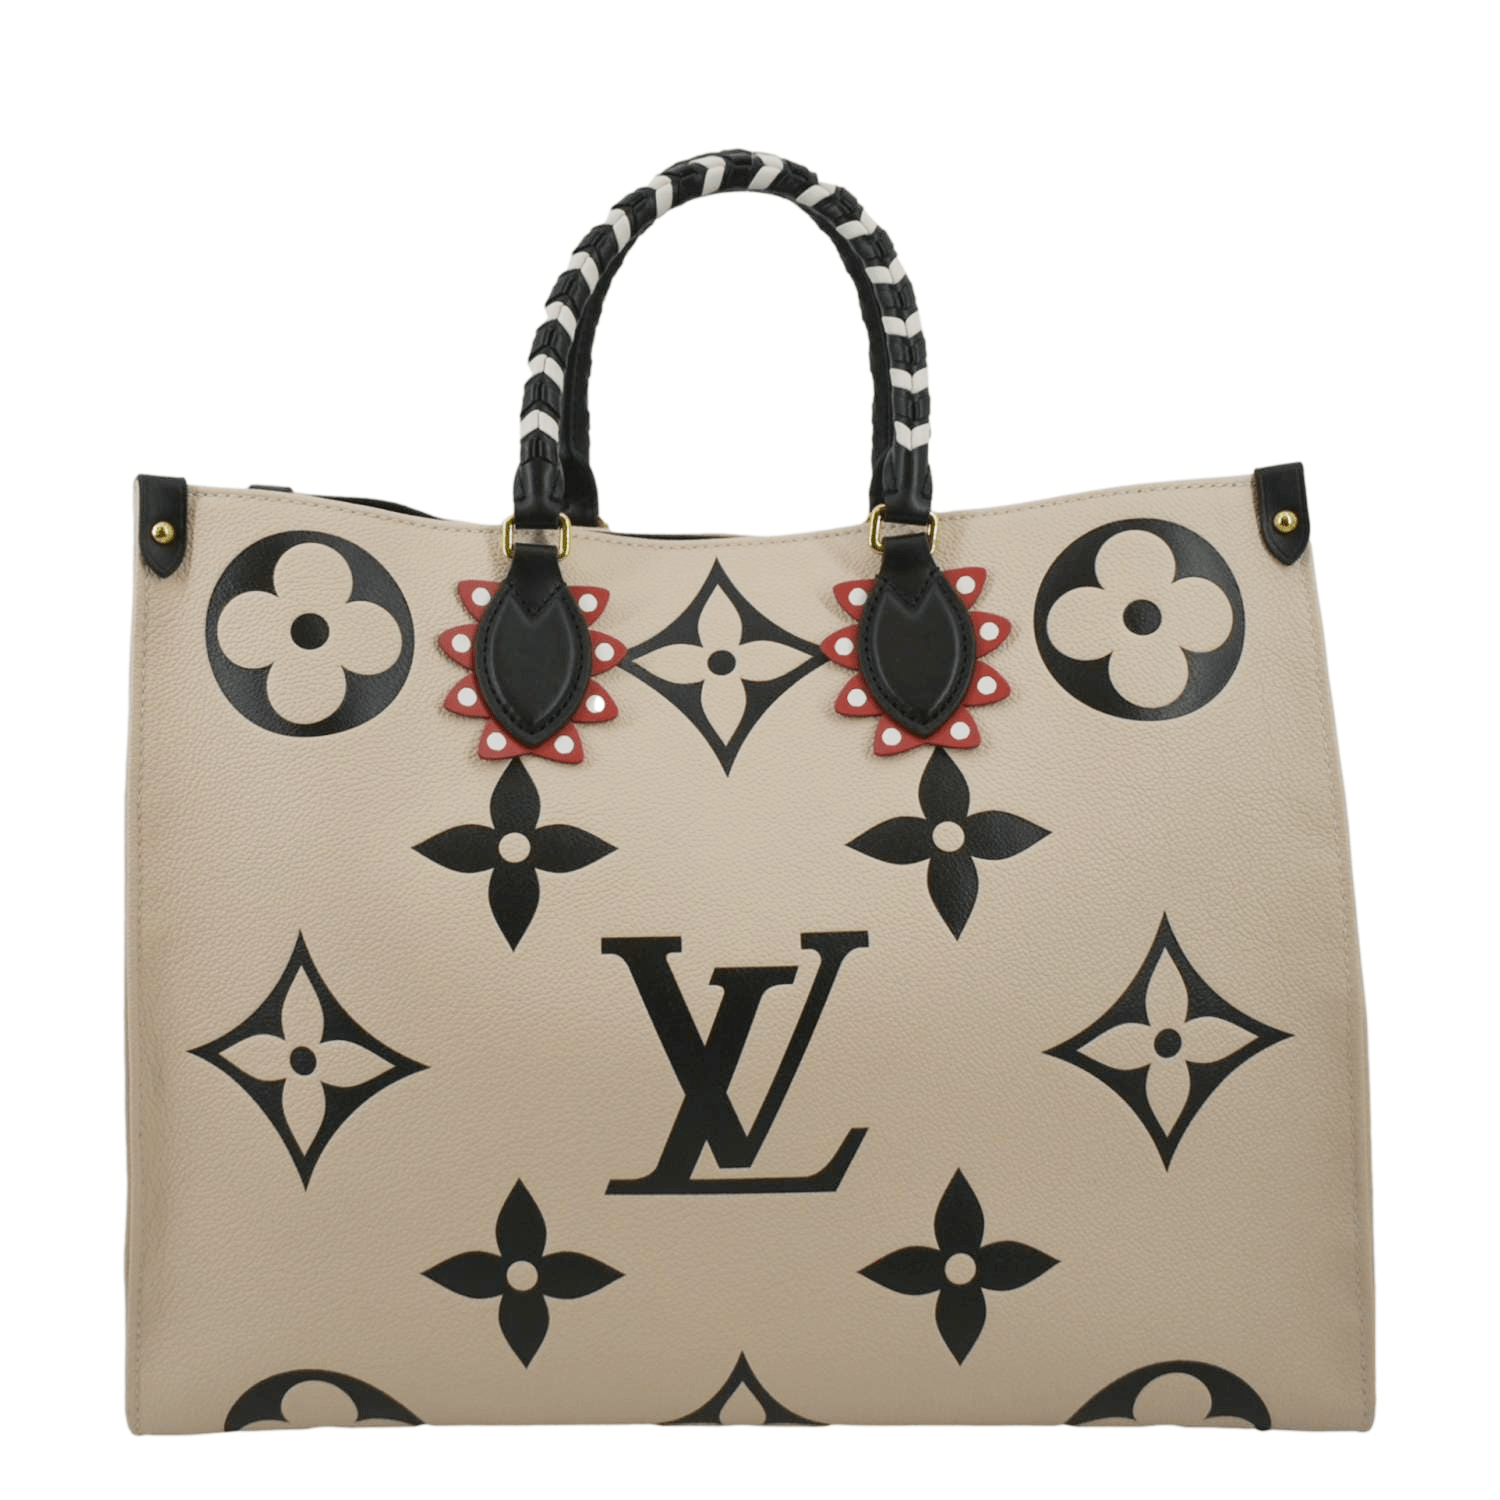 Louis Vuitton Crafty Onthego